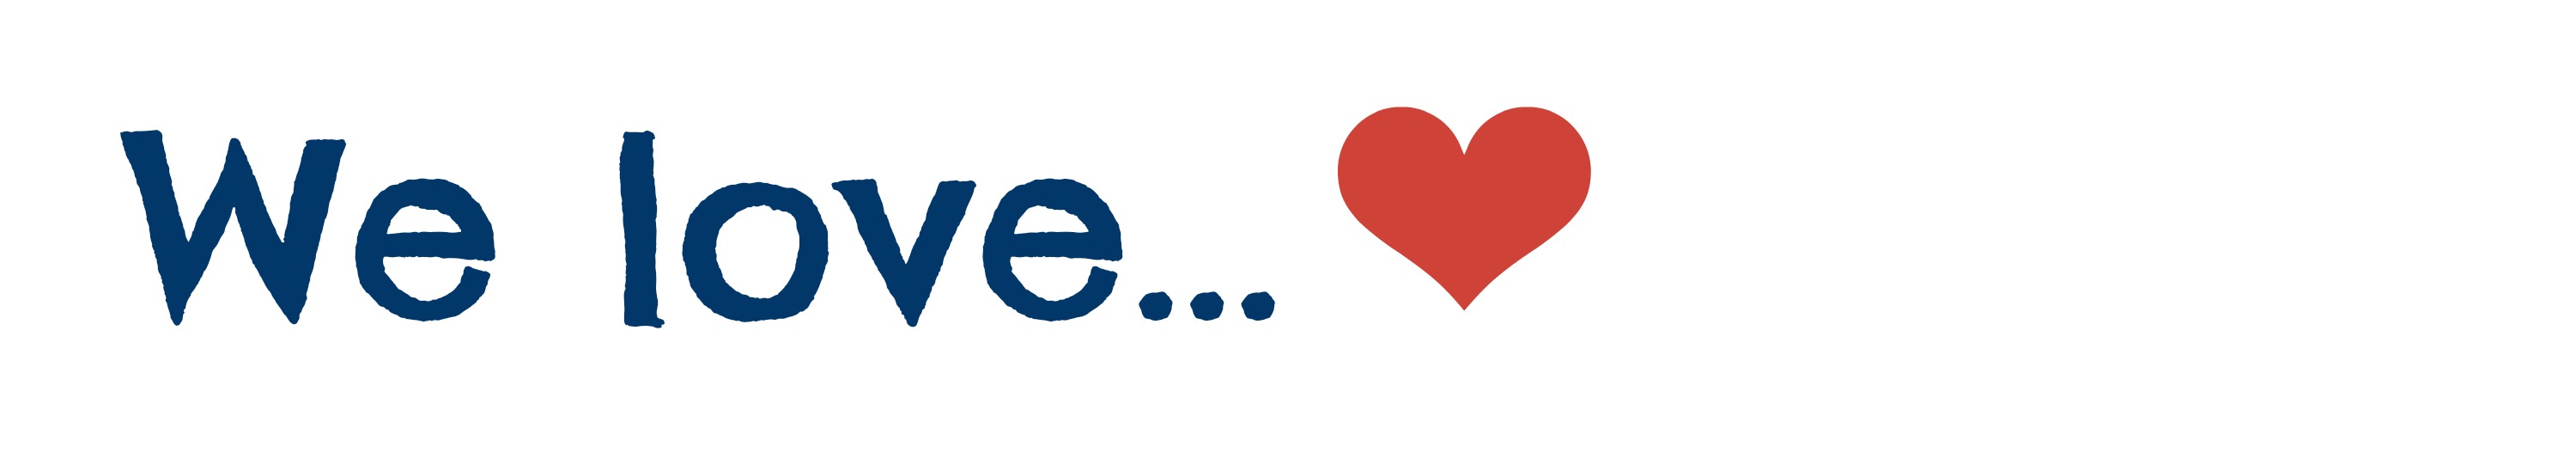 we love logo blue